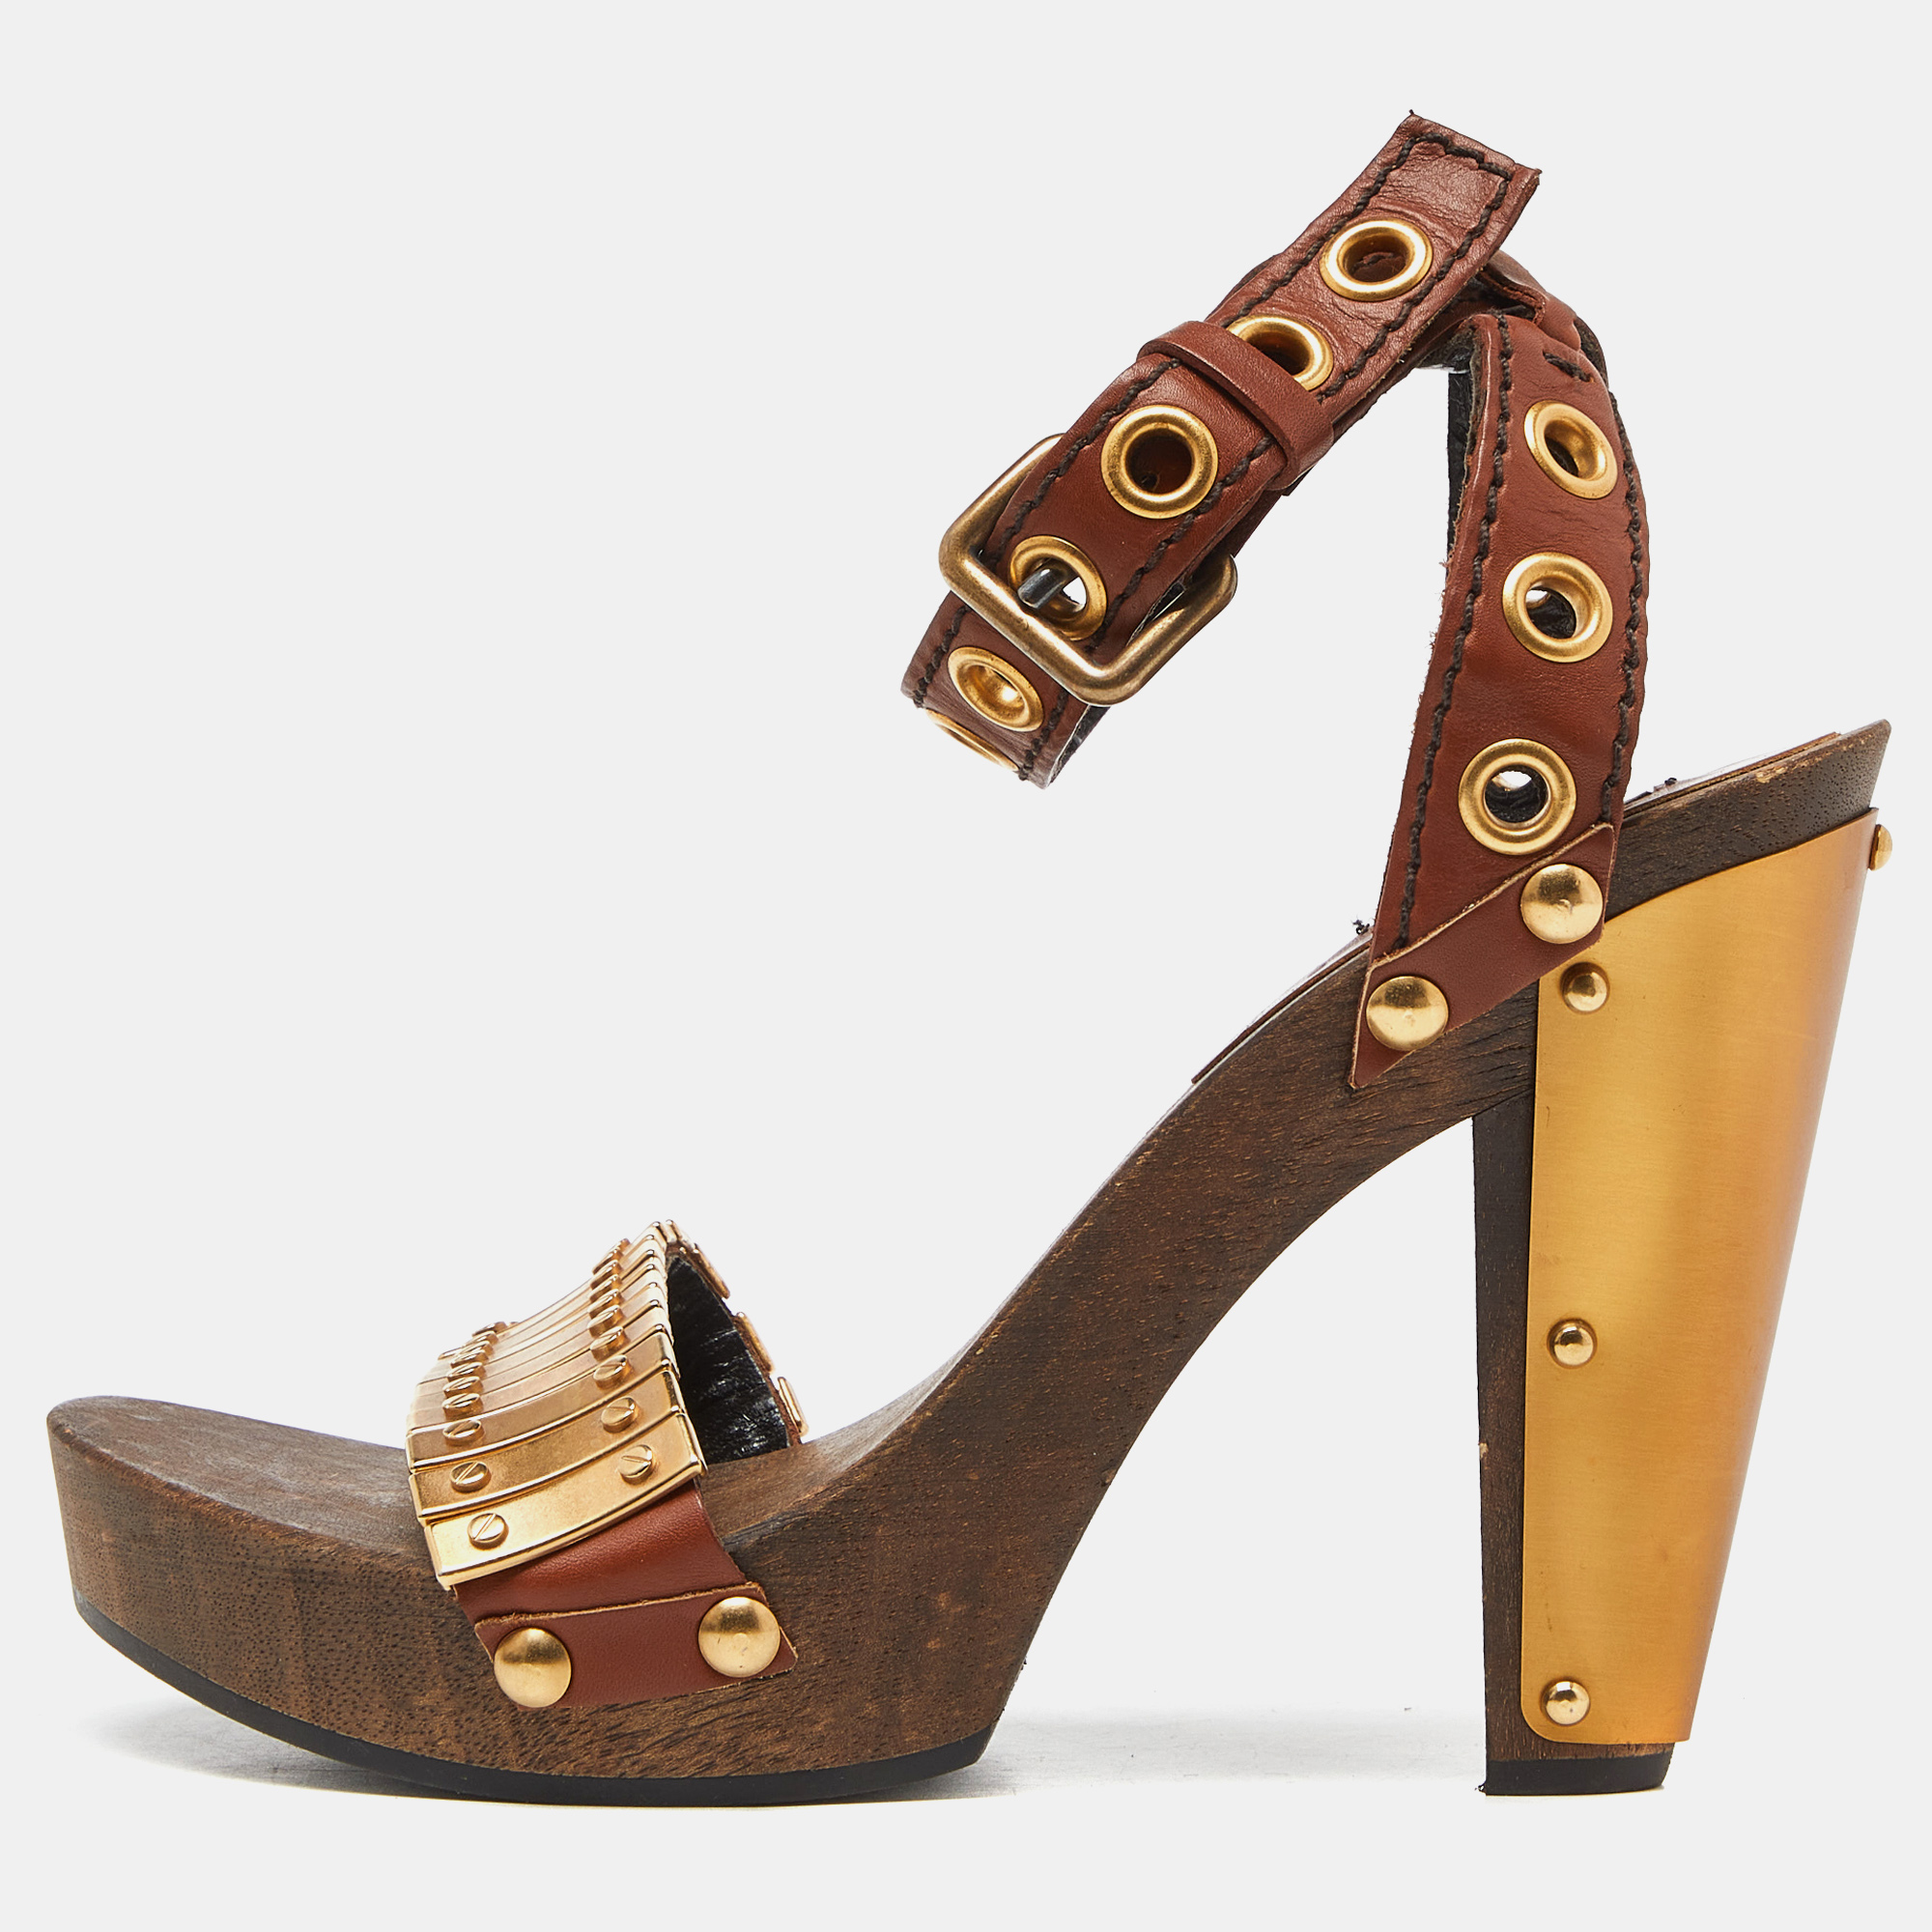 Miu miu brown/gold leather and metal platform eyelet ankle strap sandals size 37